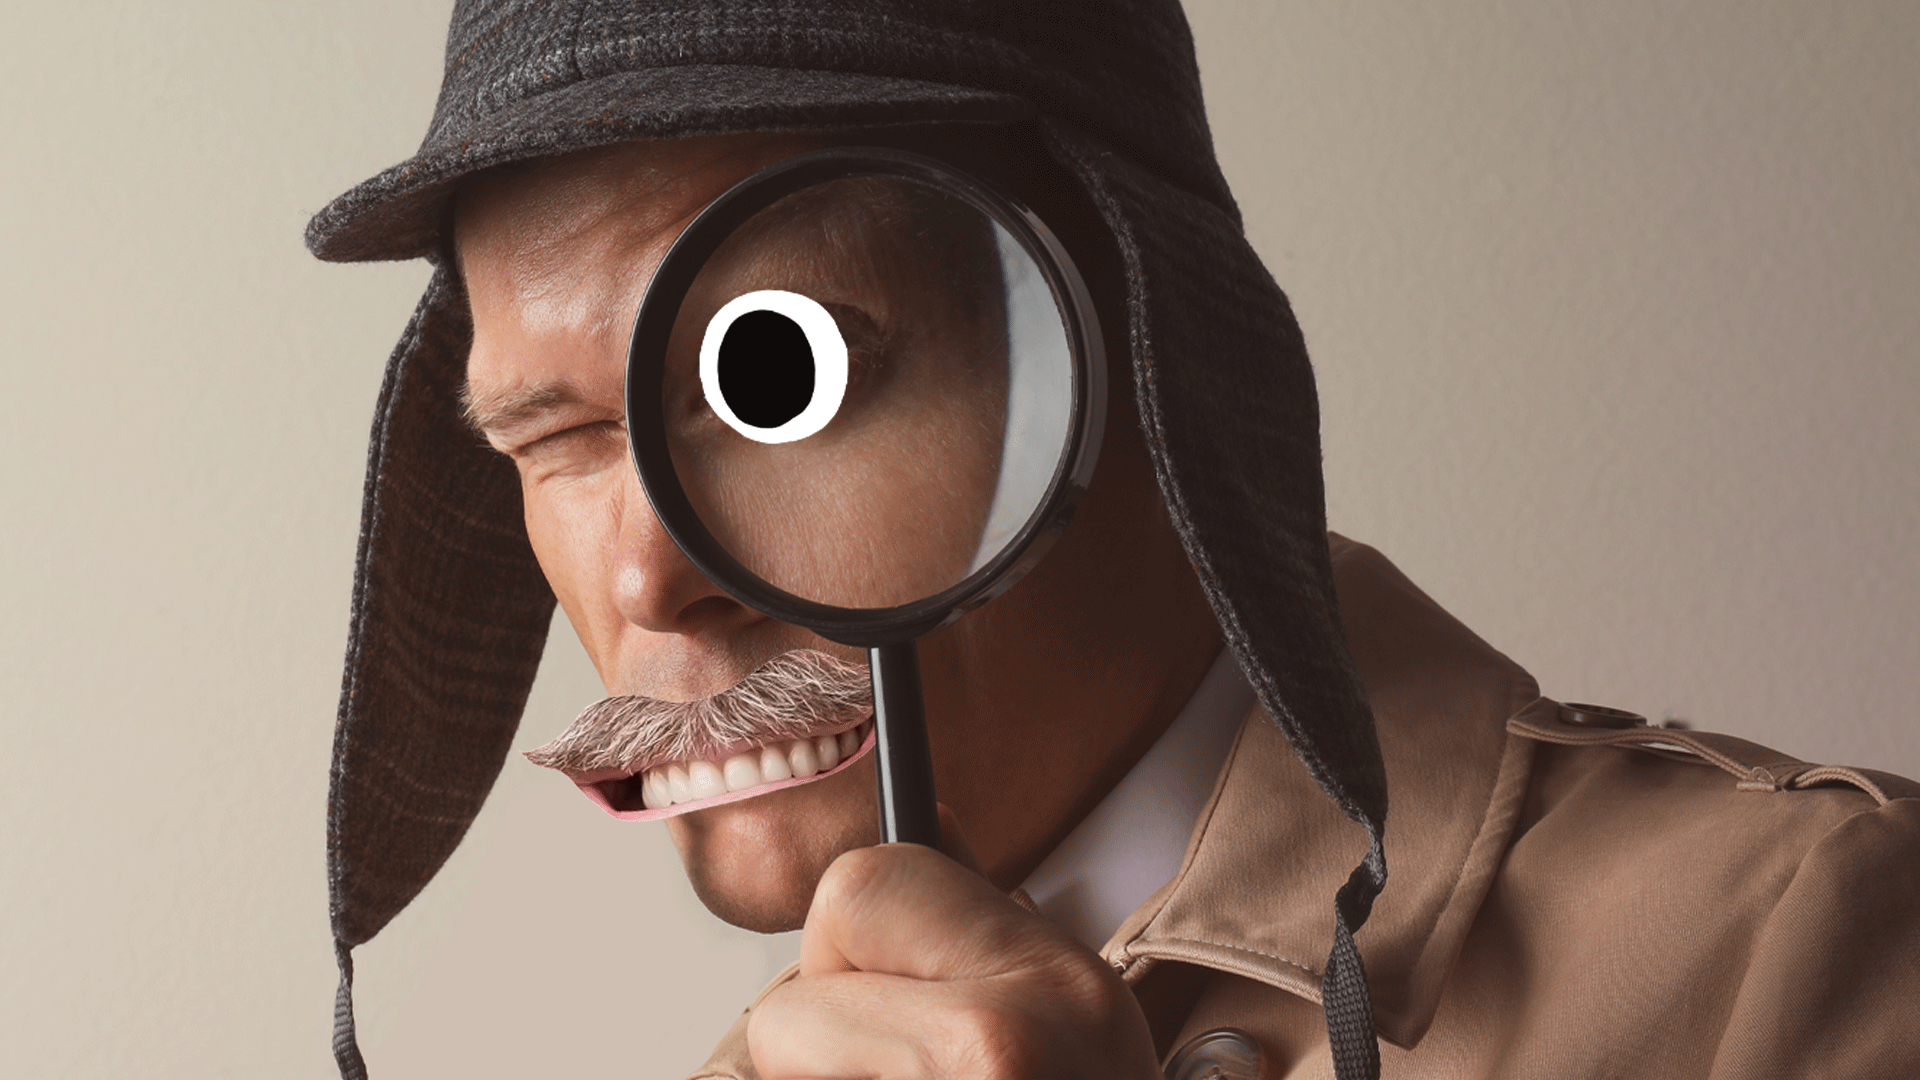 A spy dressed as Sherlock Holmes